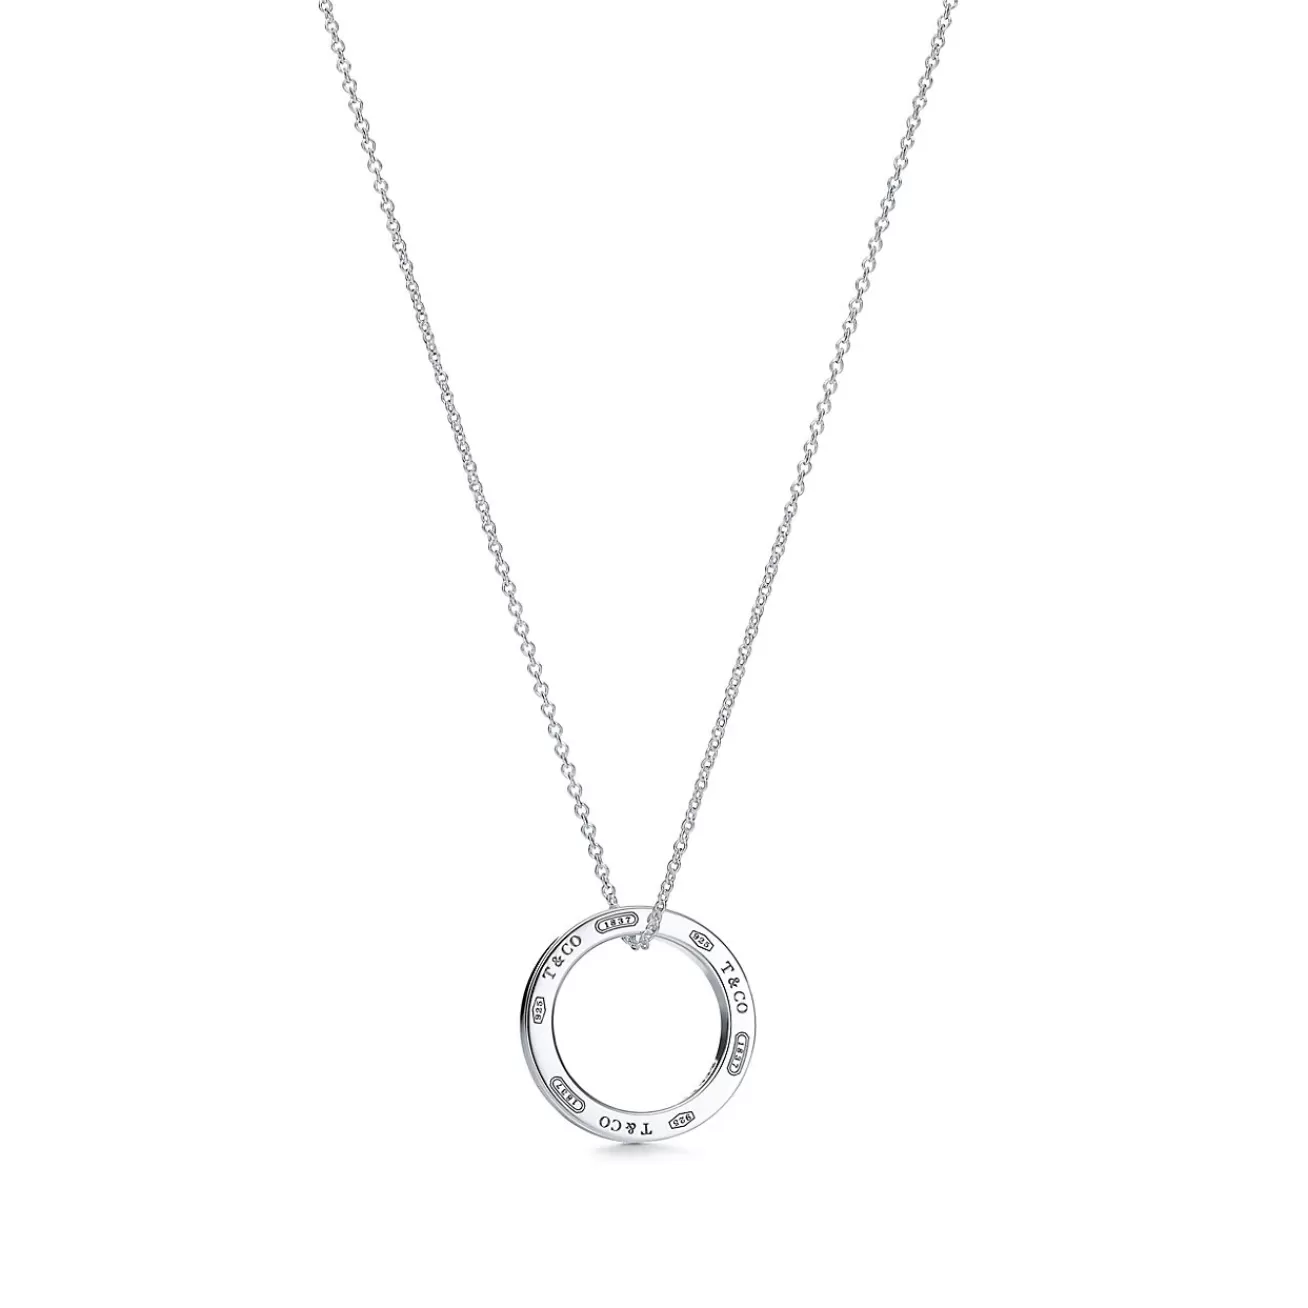 Tiffany & Co. Tiffany 1837™ pendant in sterling silver on a 16" chain. | ^ Necklaces & Pendants | Sterling Silver Jewelry